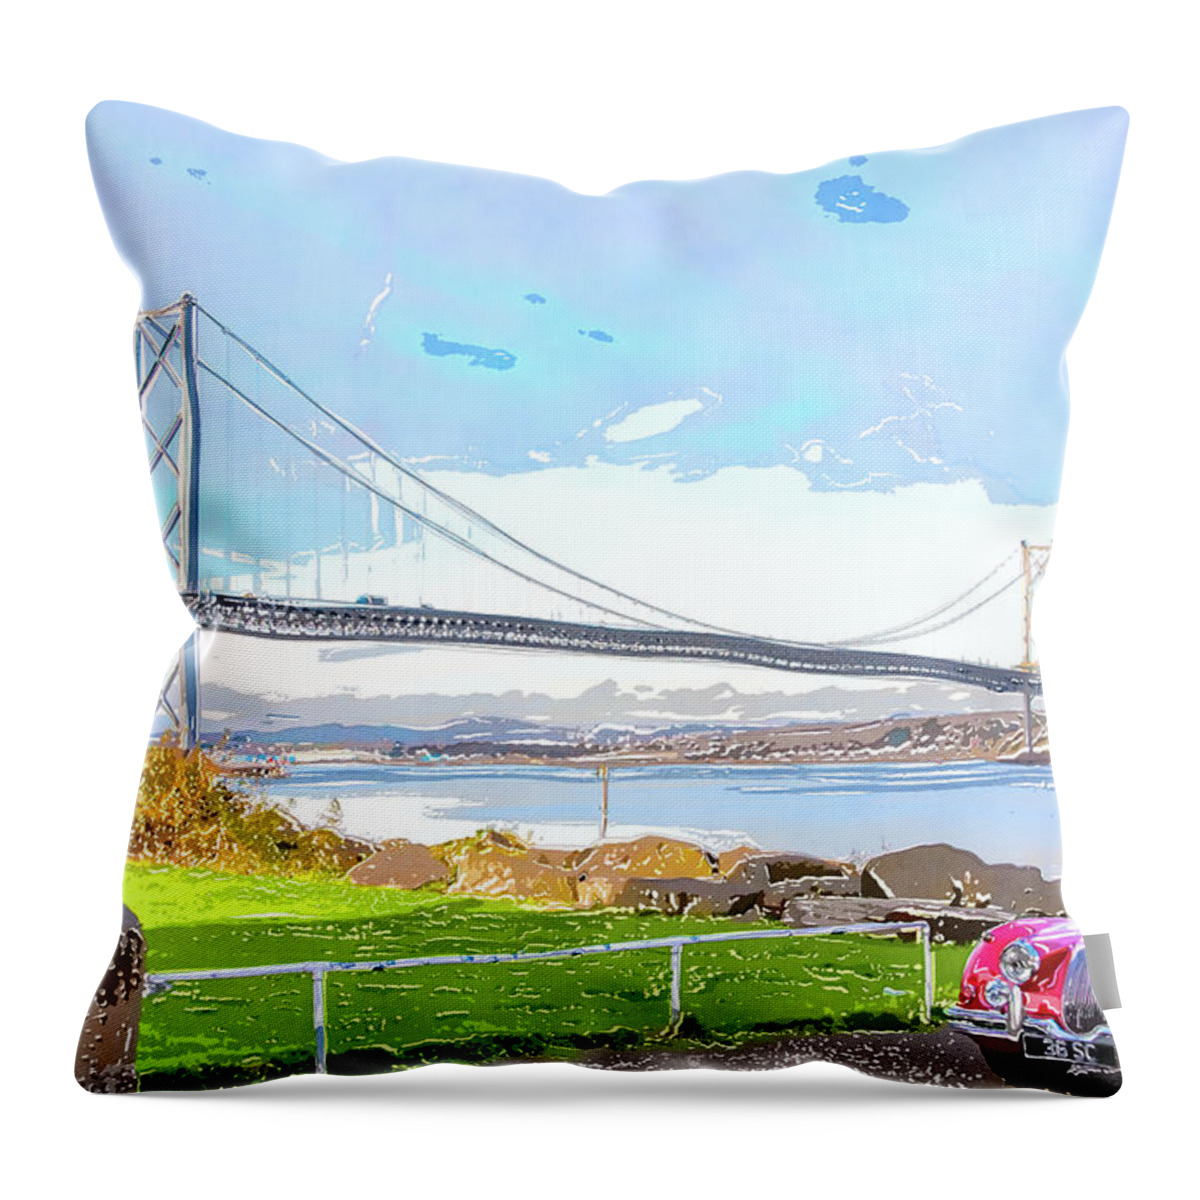 The Forth Suspension Bridge Throw Pillow featuring the digital art The Forth Suspension Bridge by SnapHappy Photos